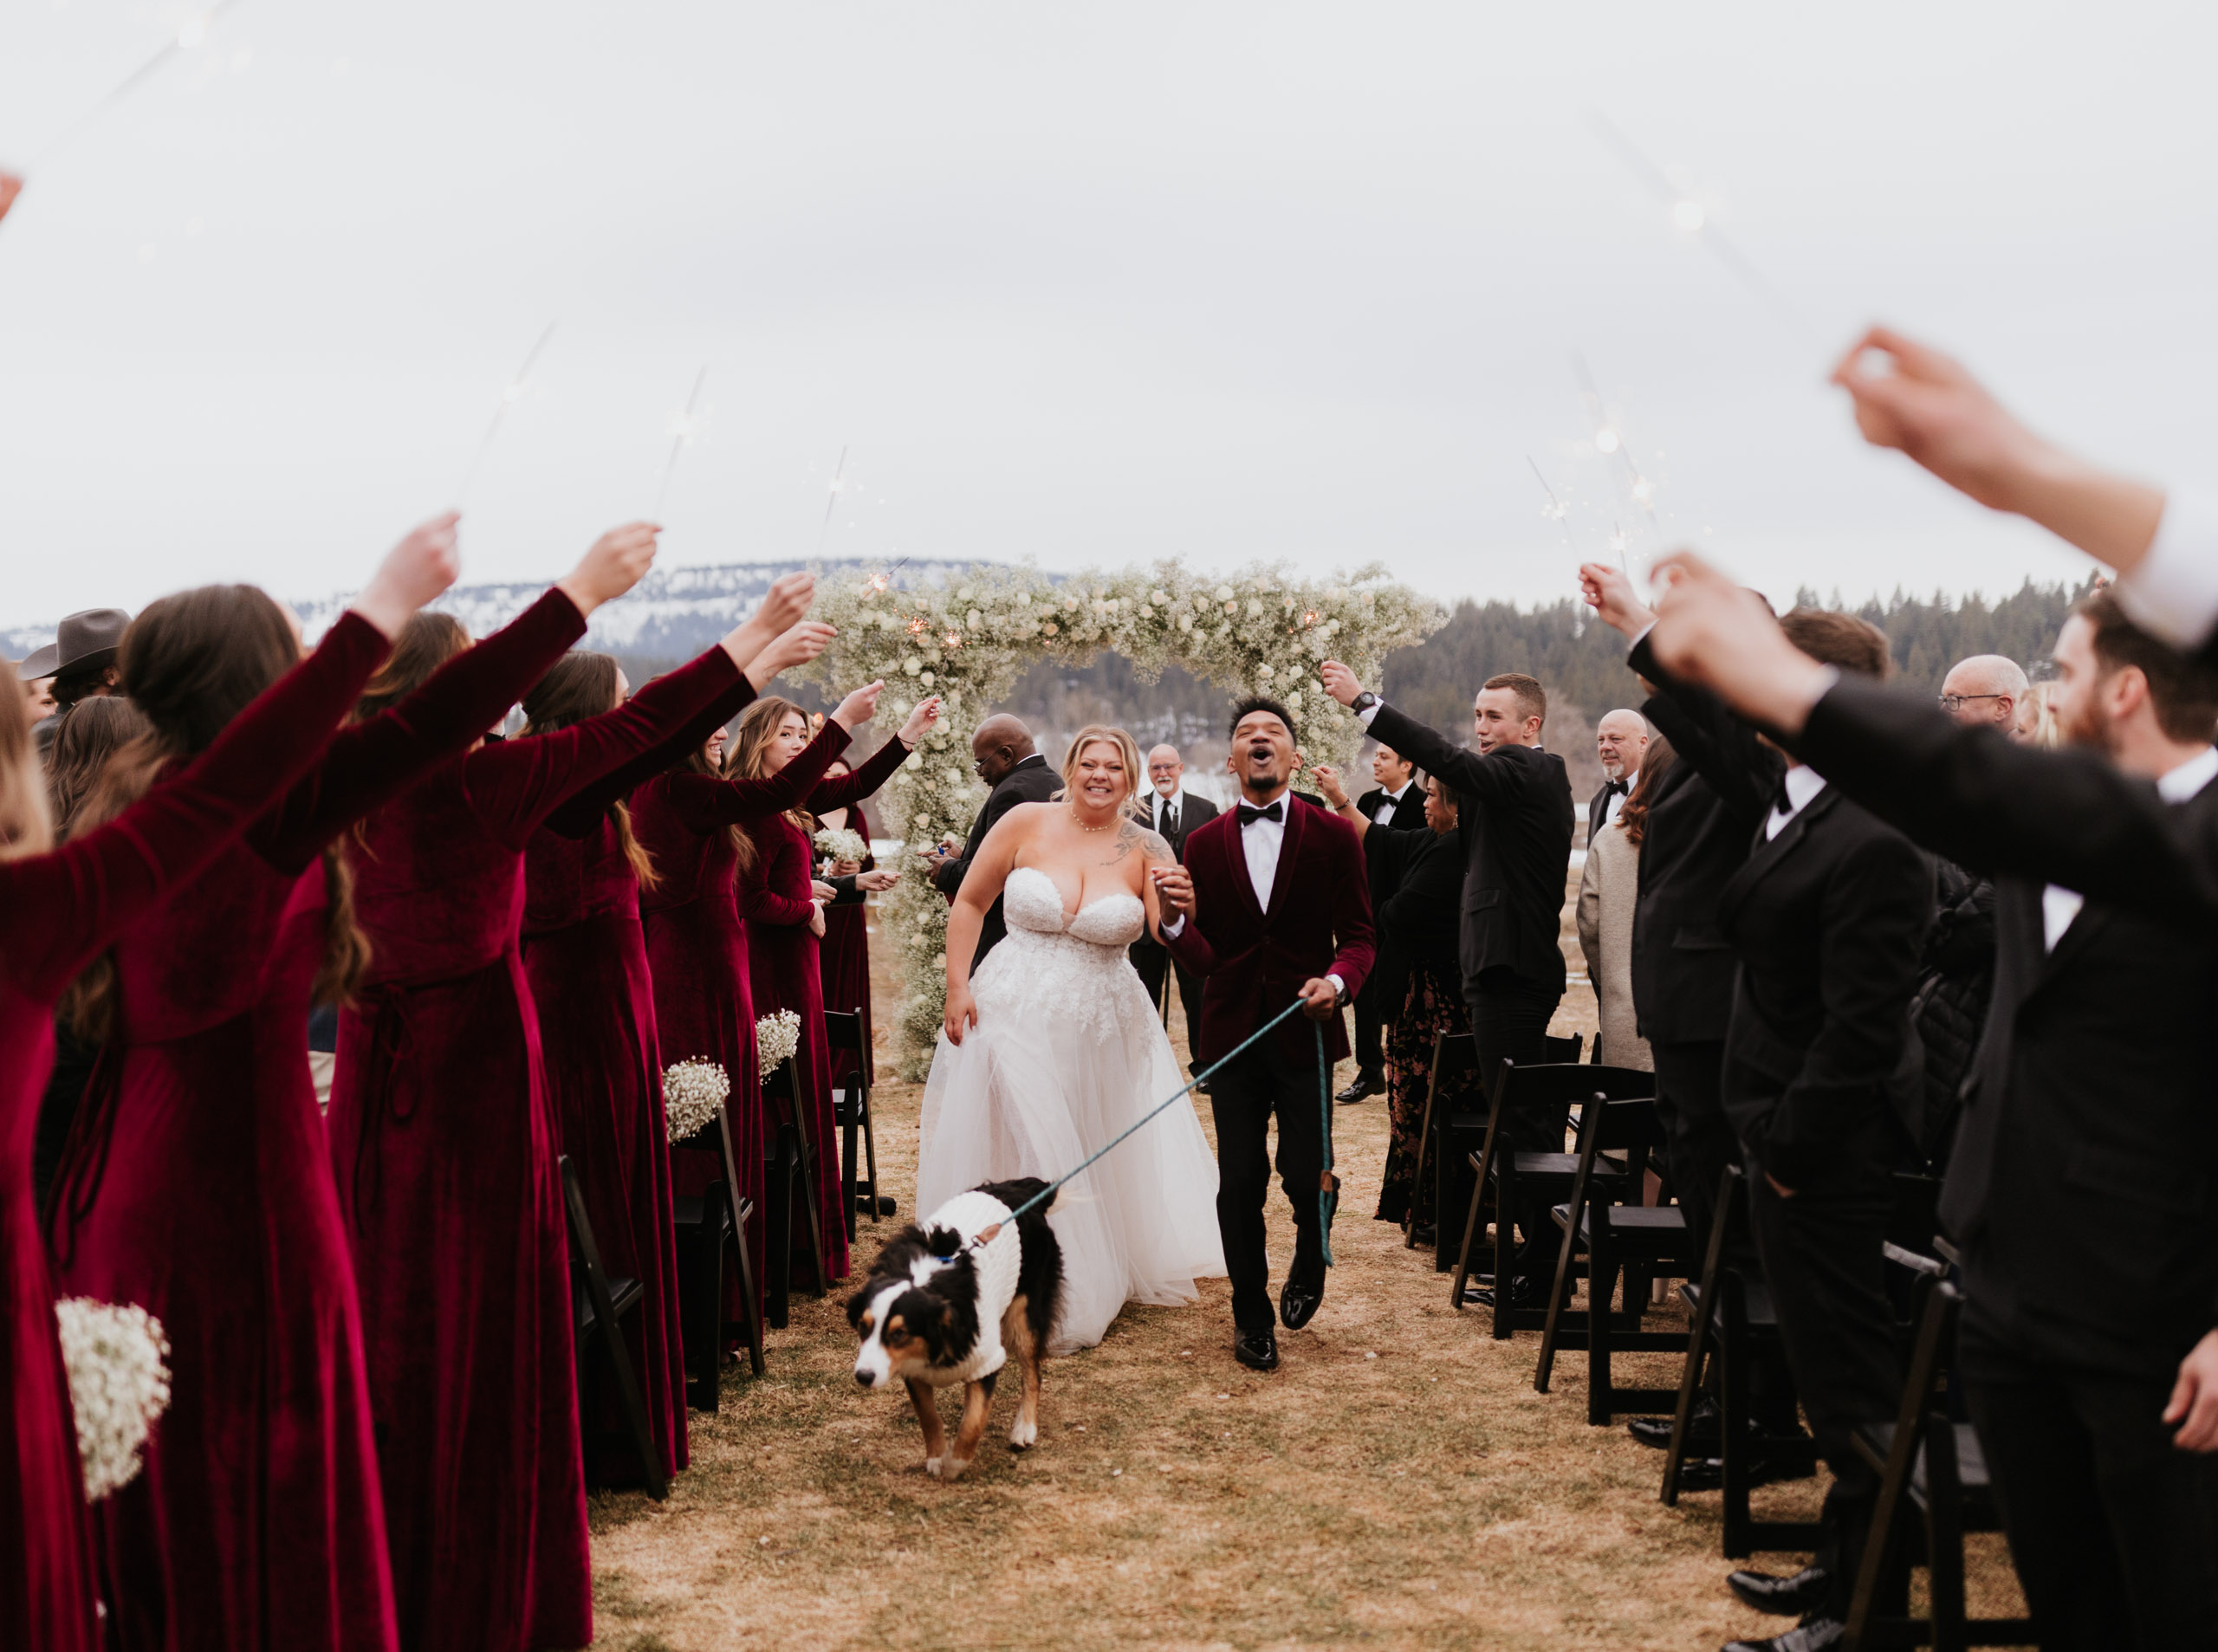 Winter Cattle Barn Wedding | Cle Elum, WA | Amy + Mark